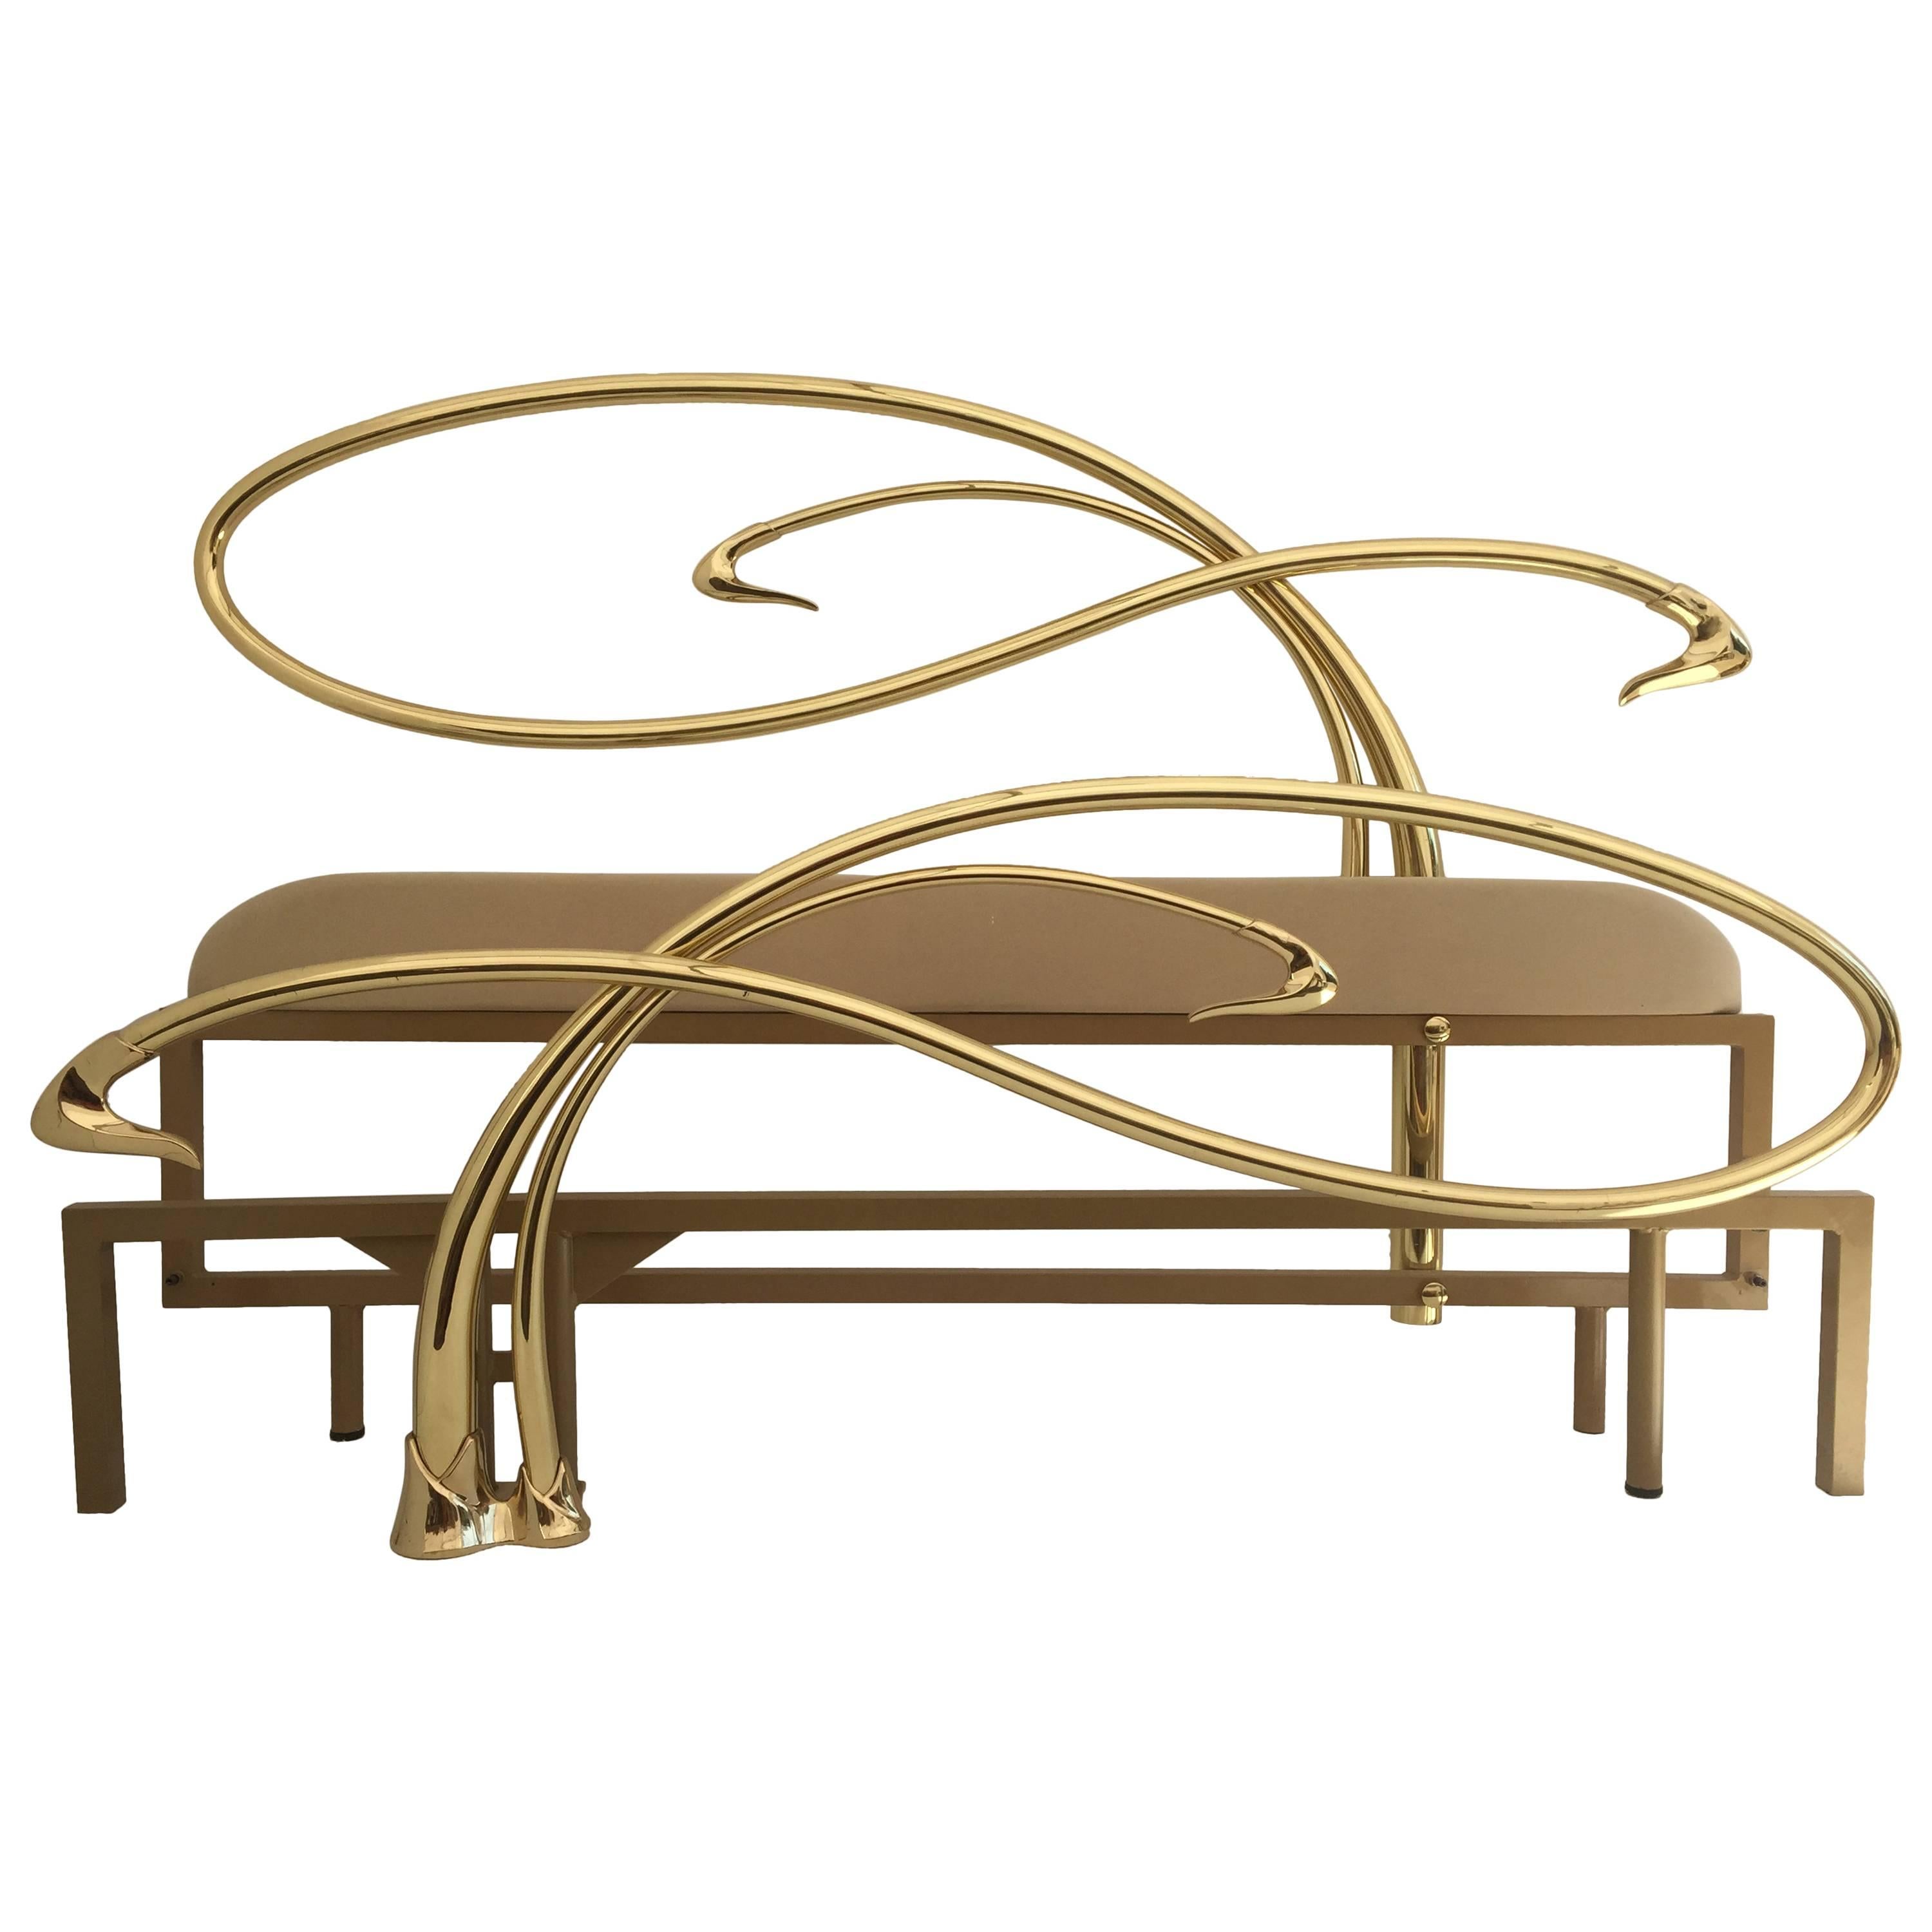 Swan Motif Art Nouveau Style Brass King-Size Bed